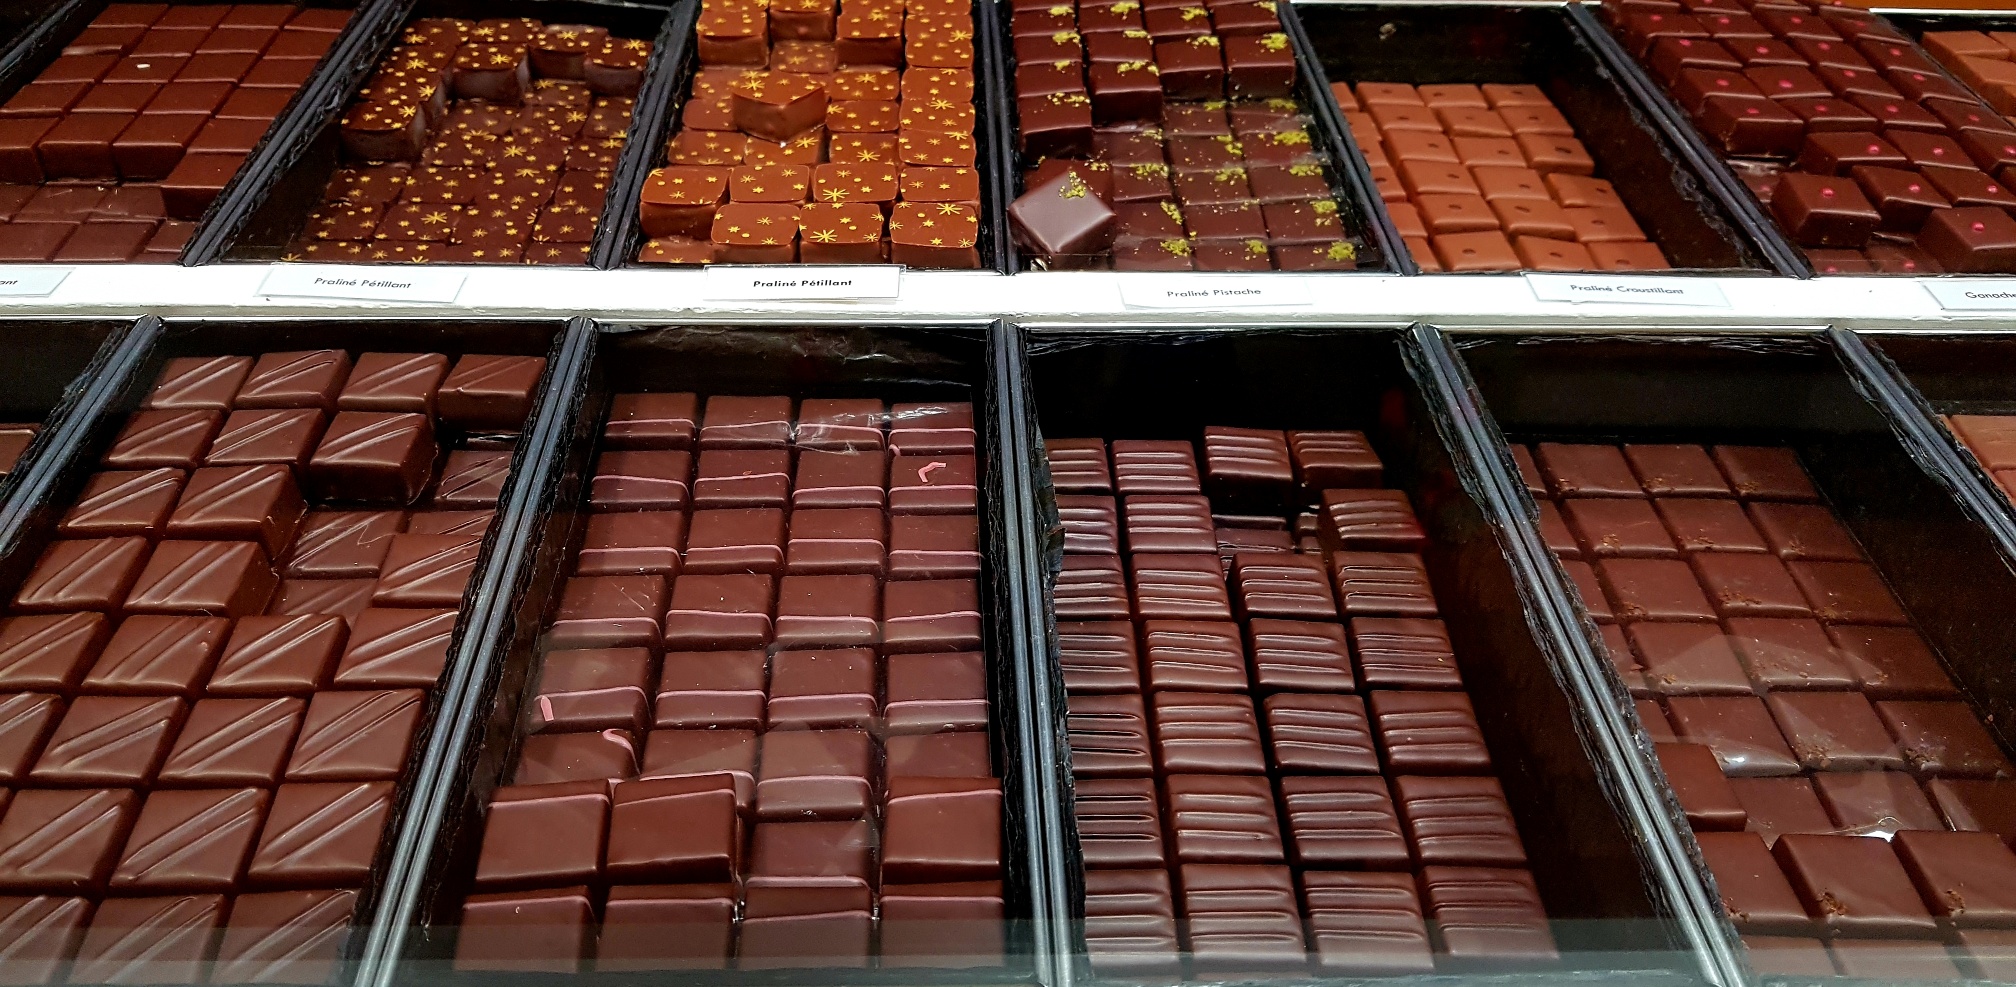 Bonbons chocolat van Aline Géhant in Avignon